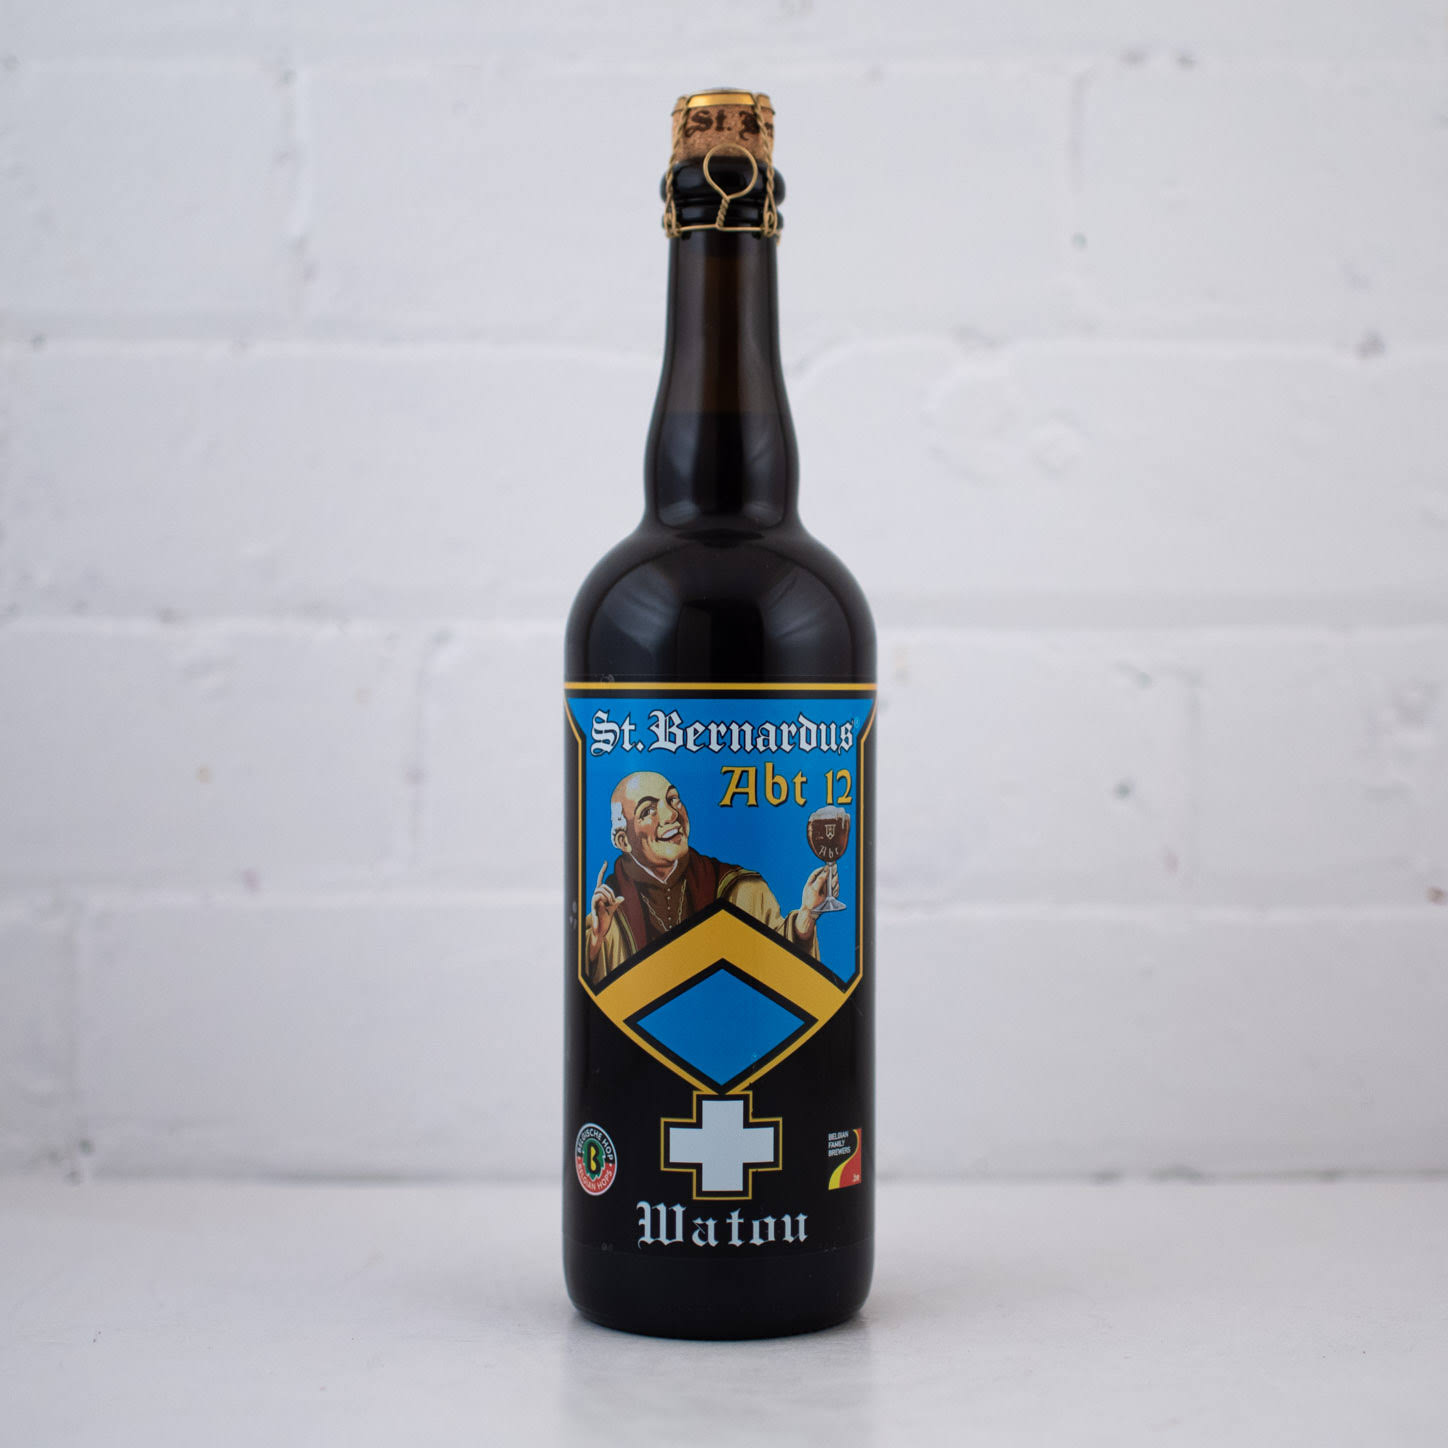 St Bernardus ABT 12 Ale Beer Bottle - 750ml